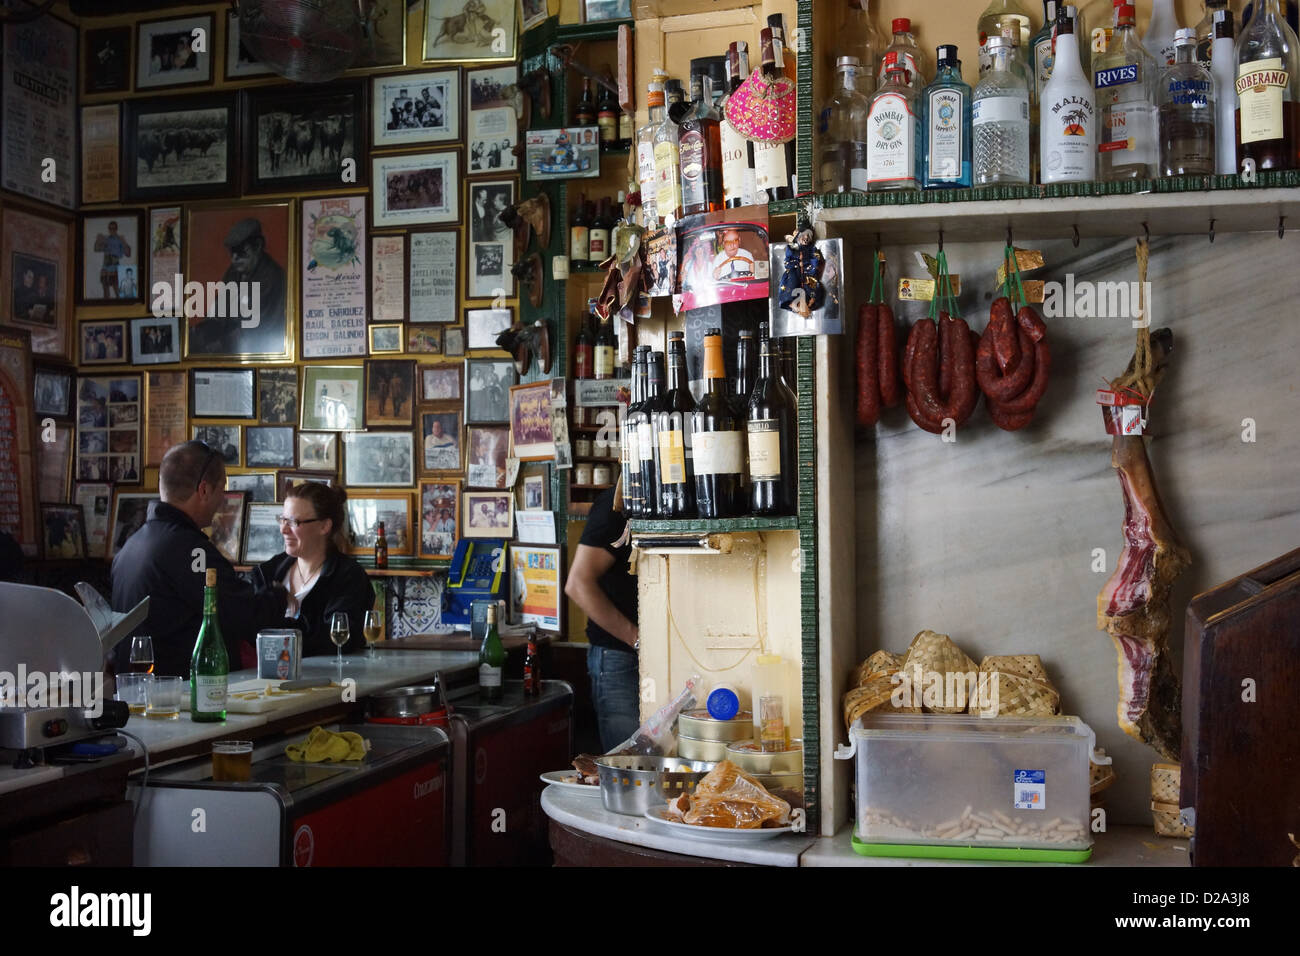 Casa manteca cadiz andalousie espagne tapa bar Banque D'Images